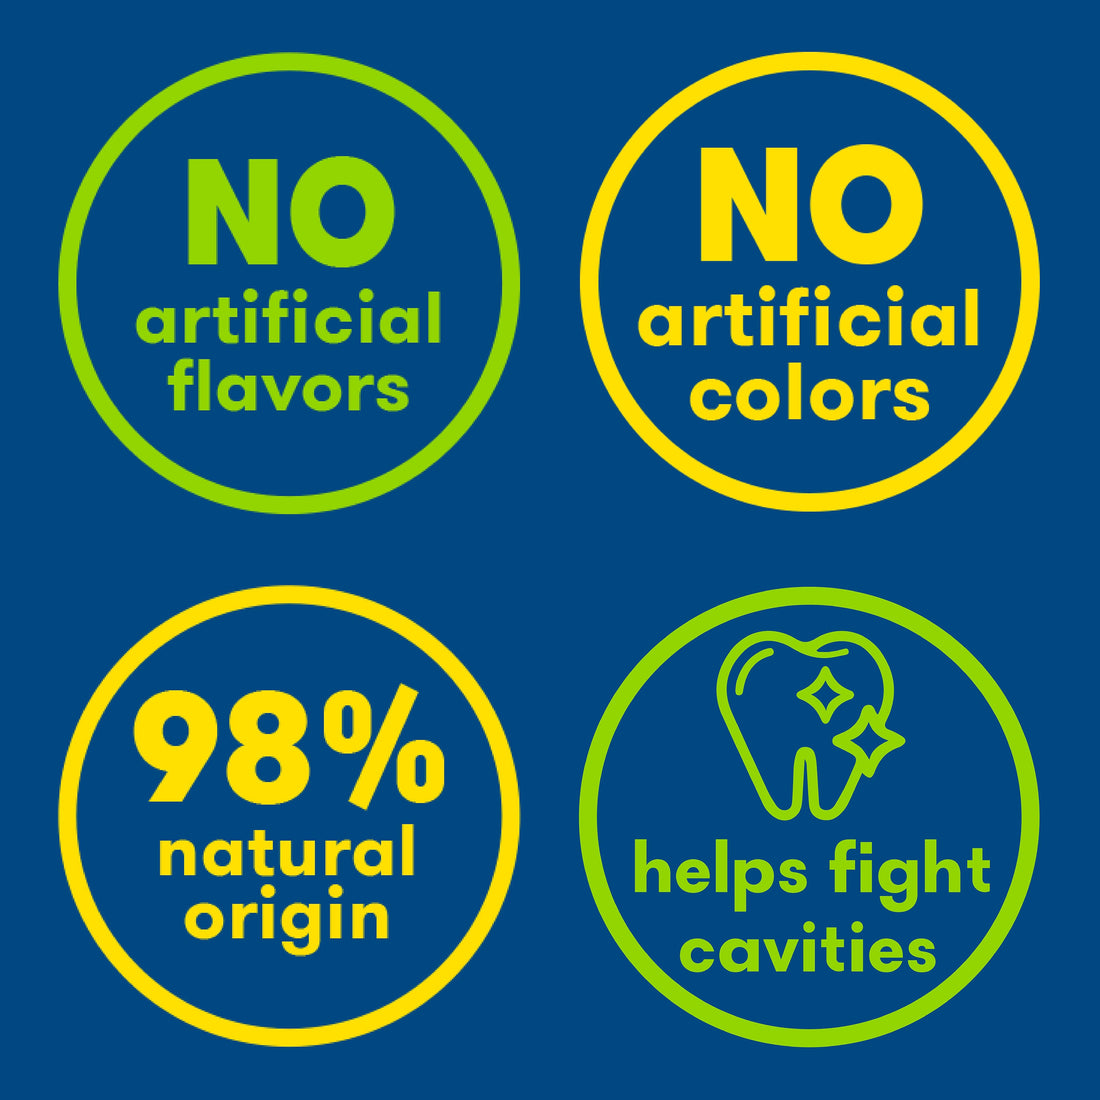 Icons: No artificial flavors, No artificial colors, 98% natural origin, helps fight cavities